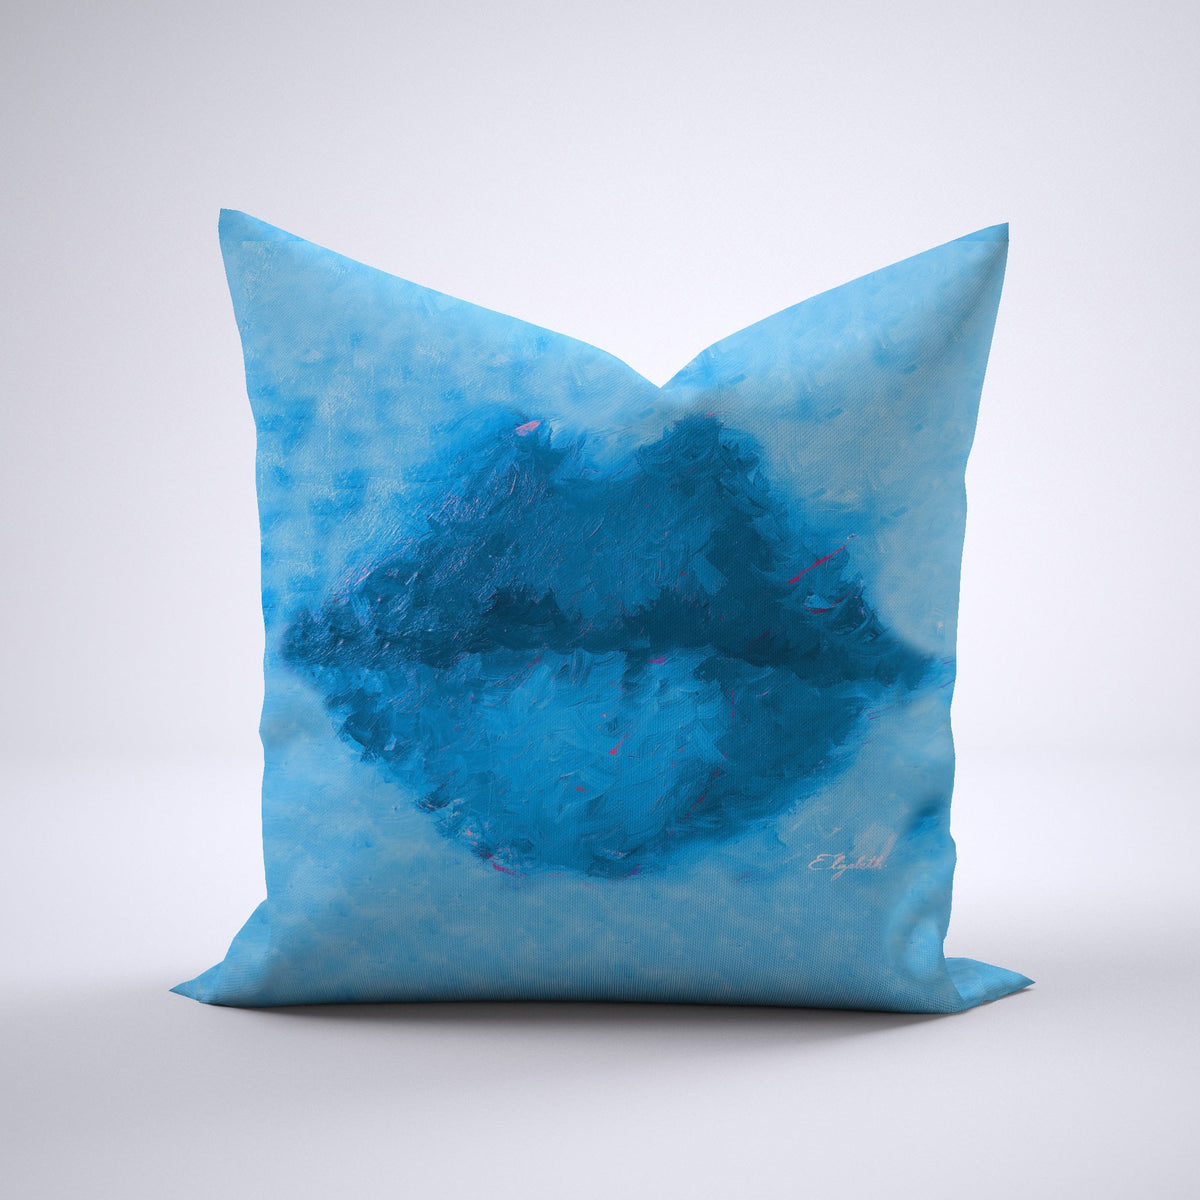 Throw Pillow - Pucker Lips Aqua Bedding Collections, Pillows, Throw Pillows MWW 